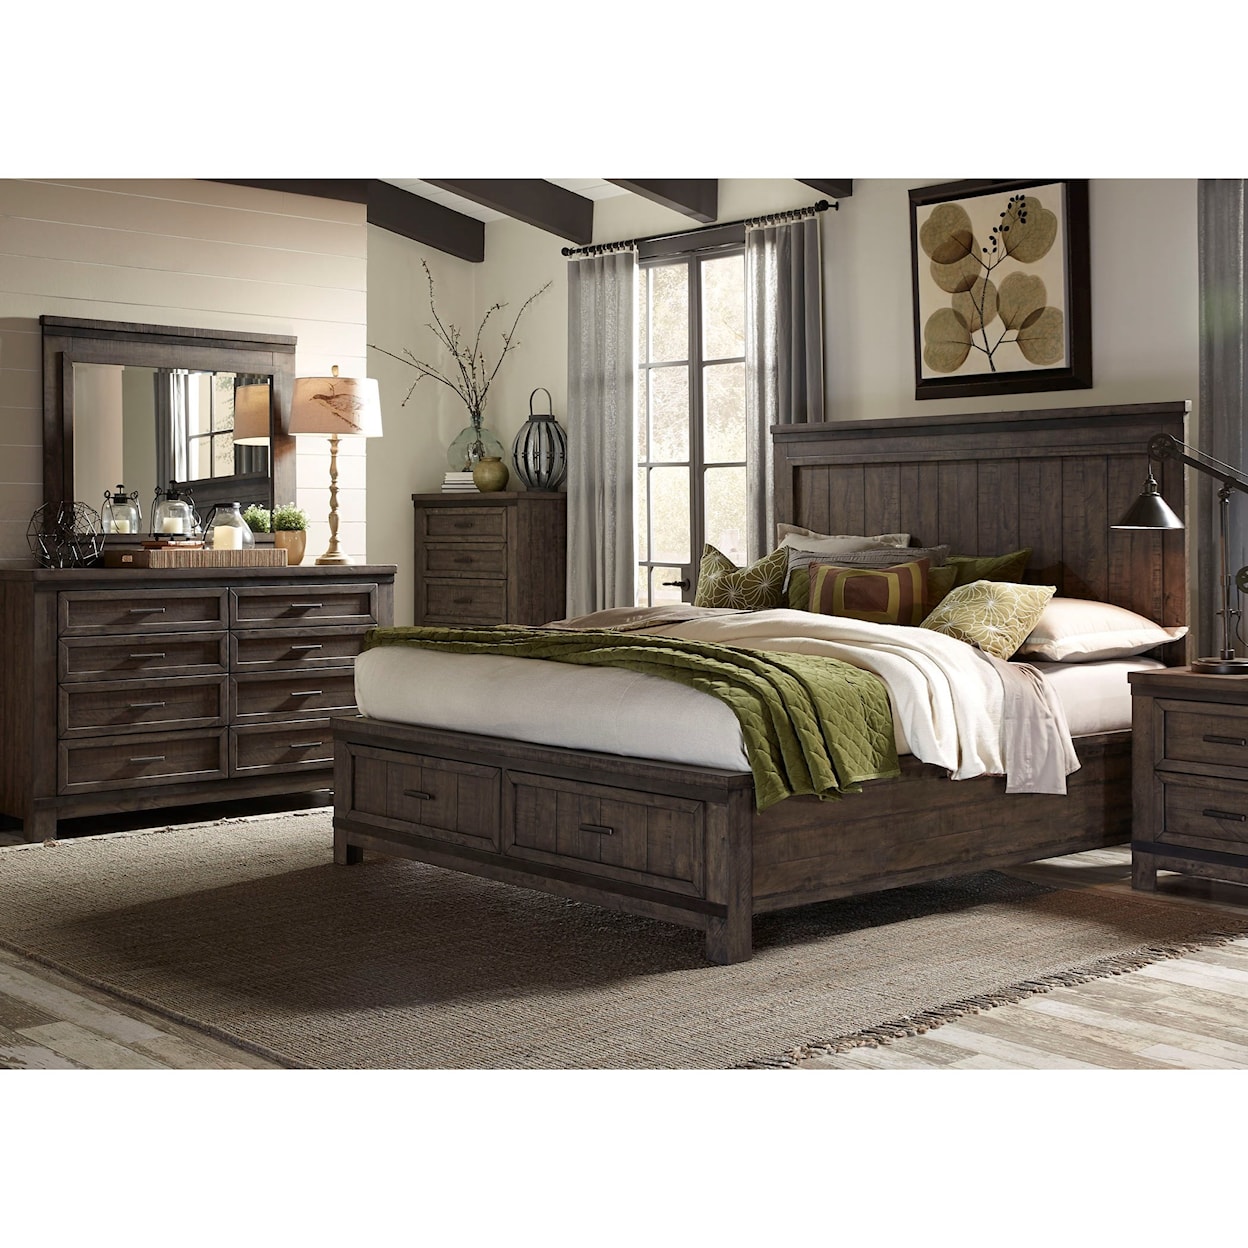 Liberty Furniture Thornwood Hills King Bedroom Group